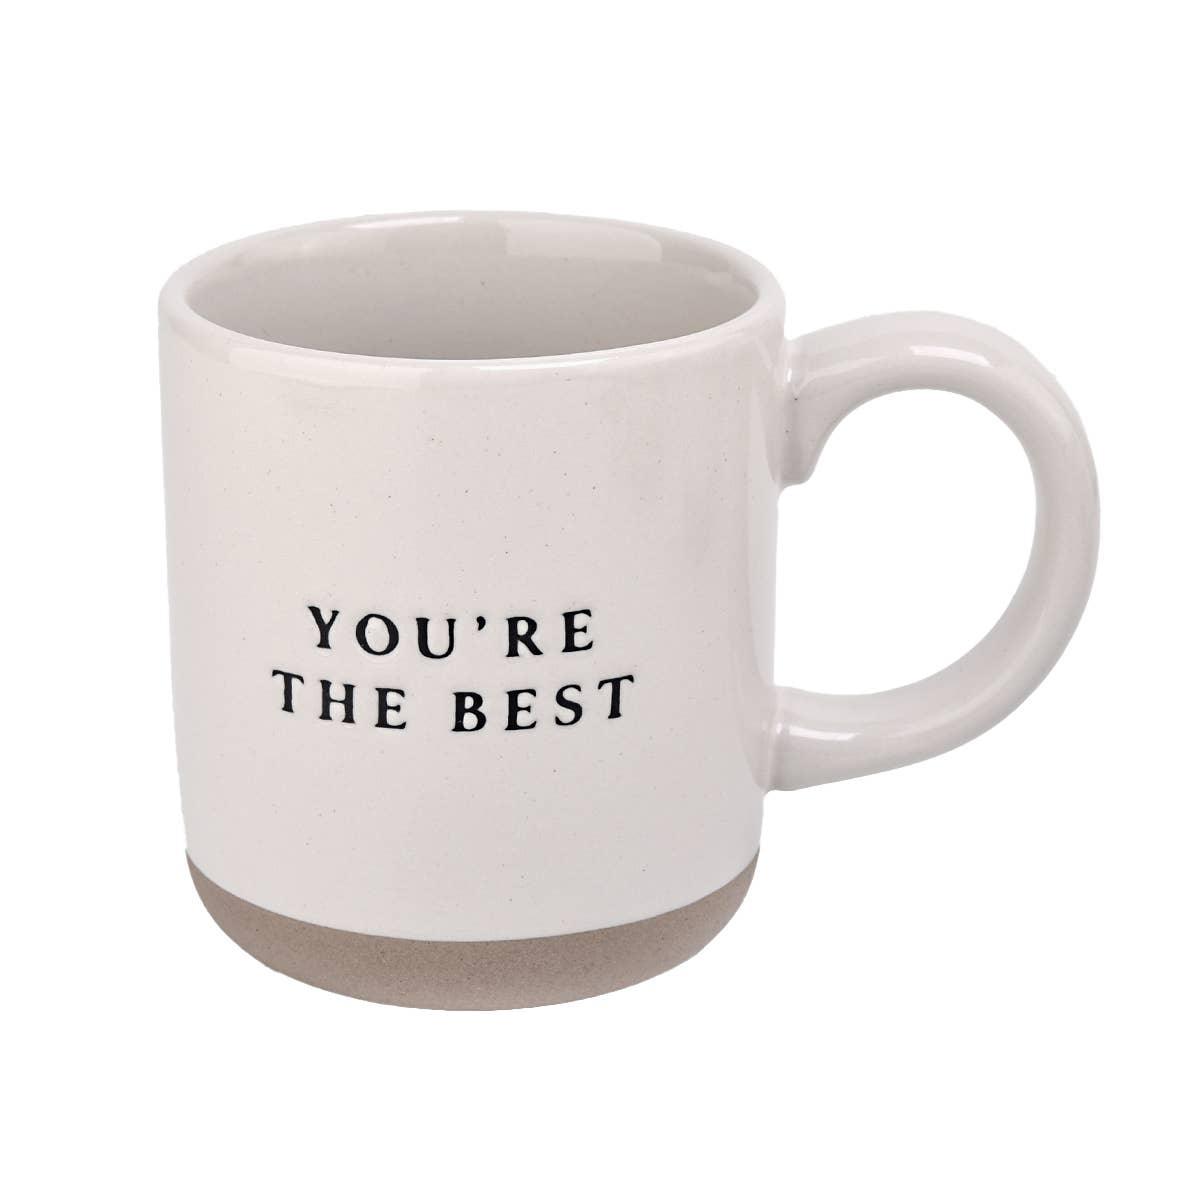 You're The Best - Cream Stoneware Coffee Mug - 14 oz - The Silver Dahlia